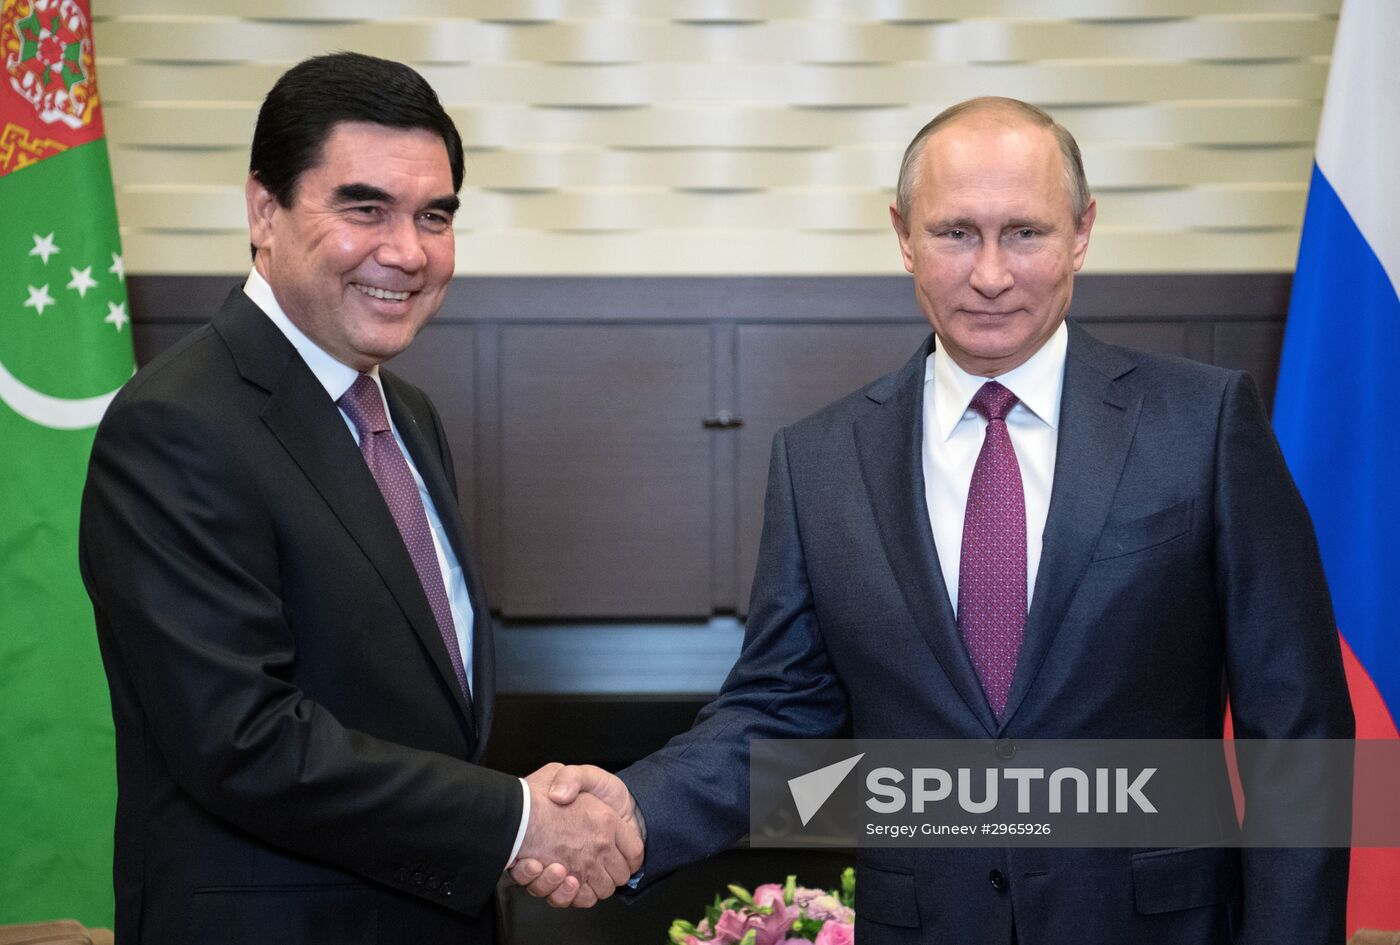 Vladimir Putin meets with Gurbanguly Berdimukhamedov